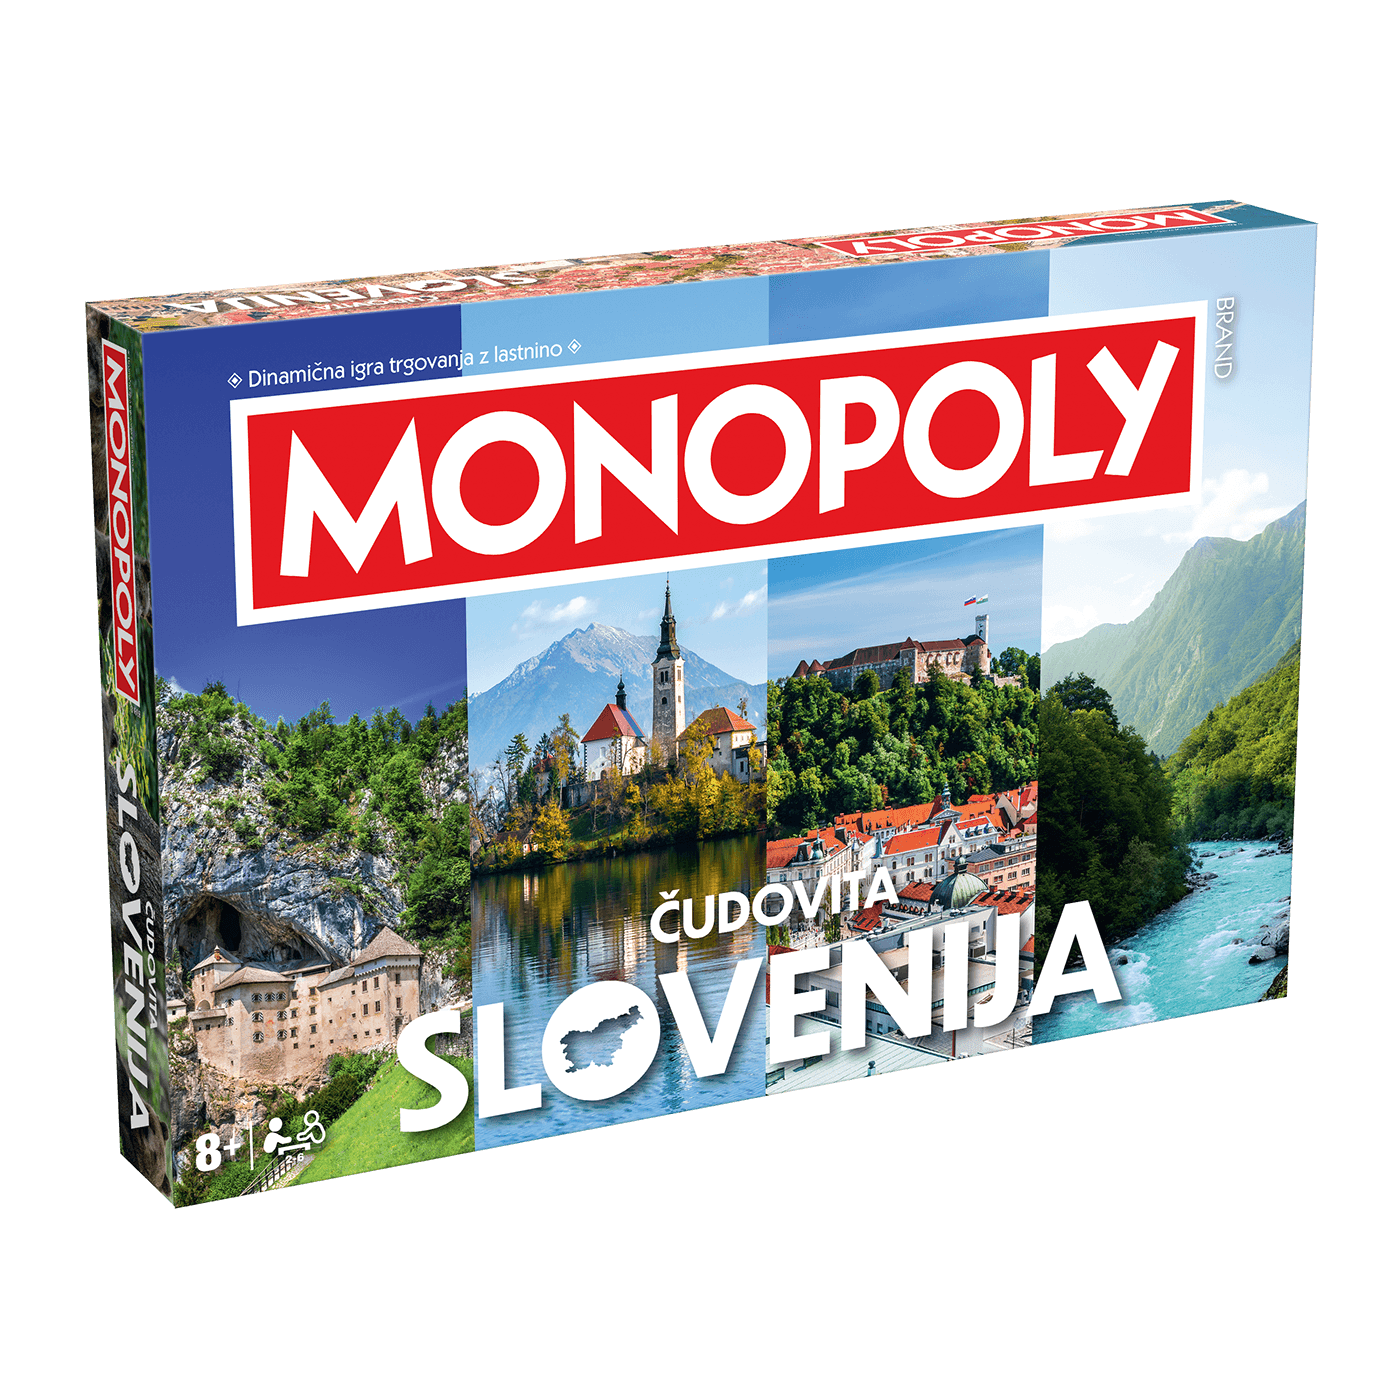 Monopoly board game design Graphic Designer 𝖠𝖽𝗈𝖻𝖾 𝖨𝗅𝗅𝗎𝗌𝗍𝗋𝖺𝗍𝗈𝗋 photoshop Layout print